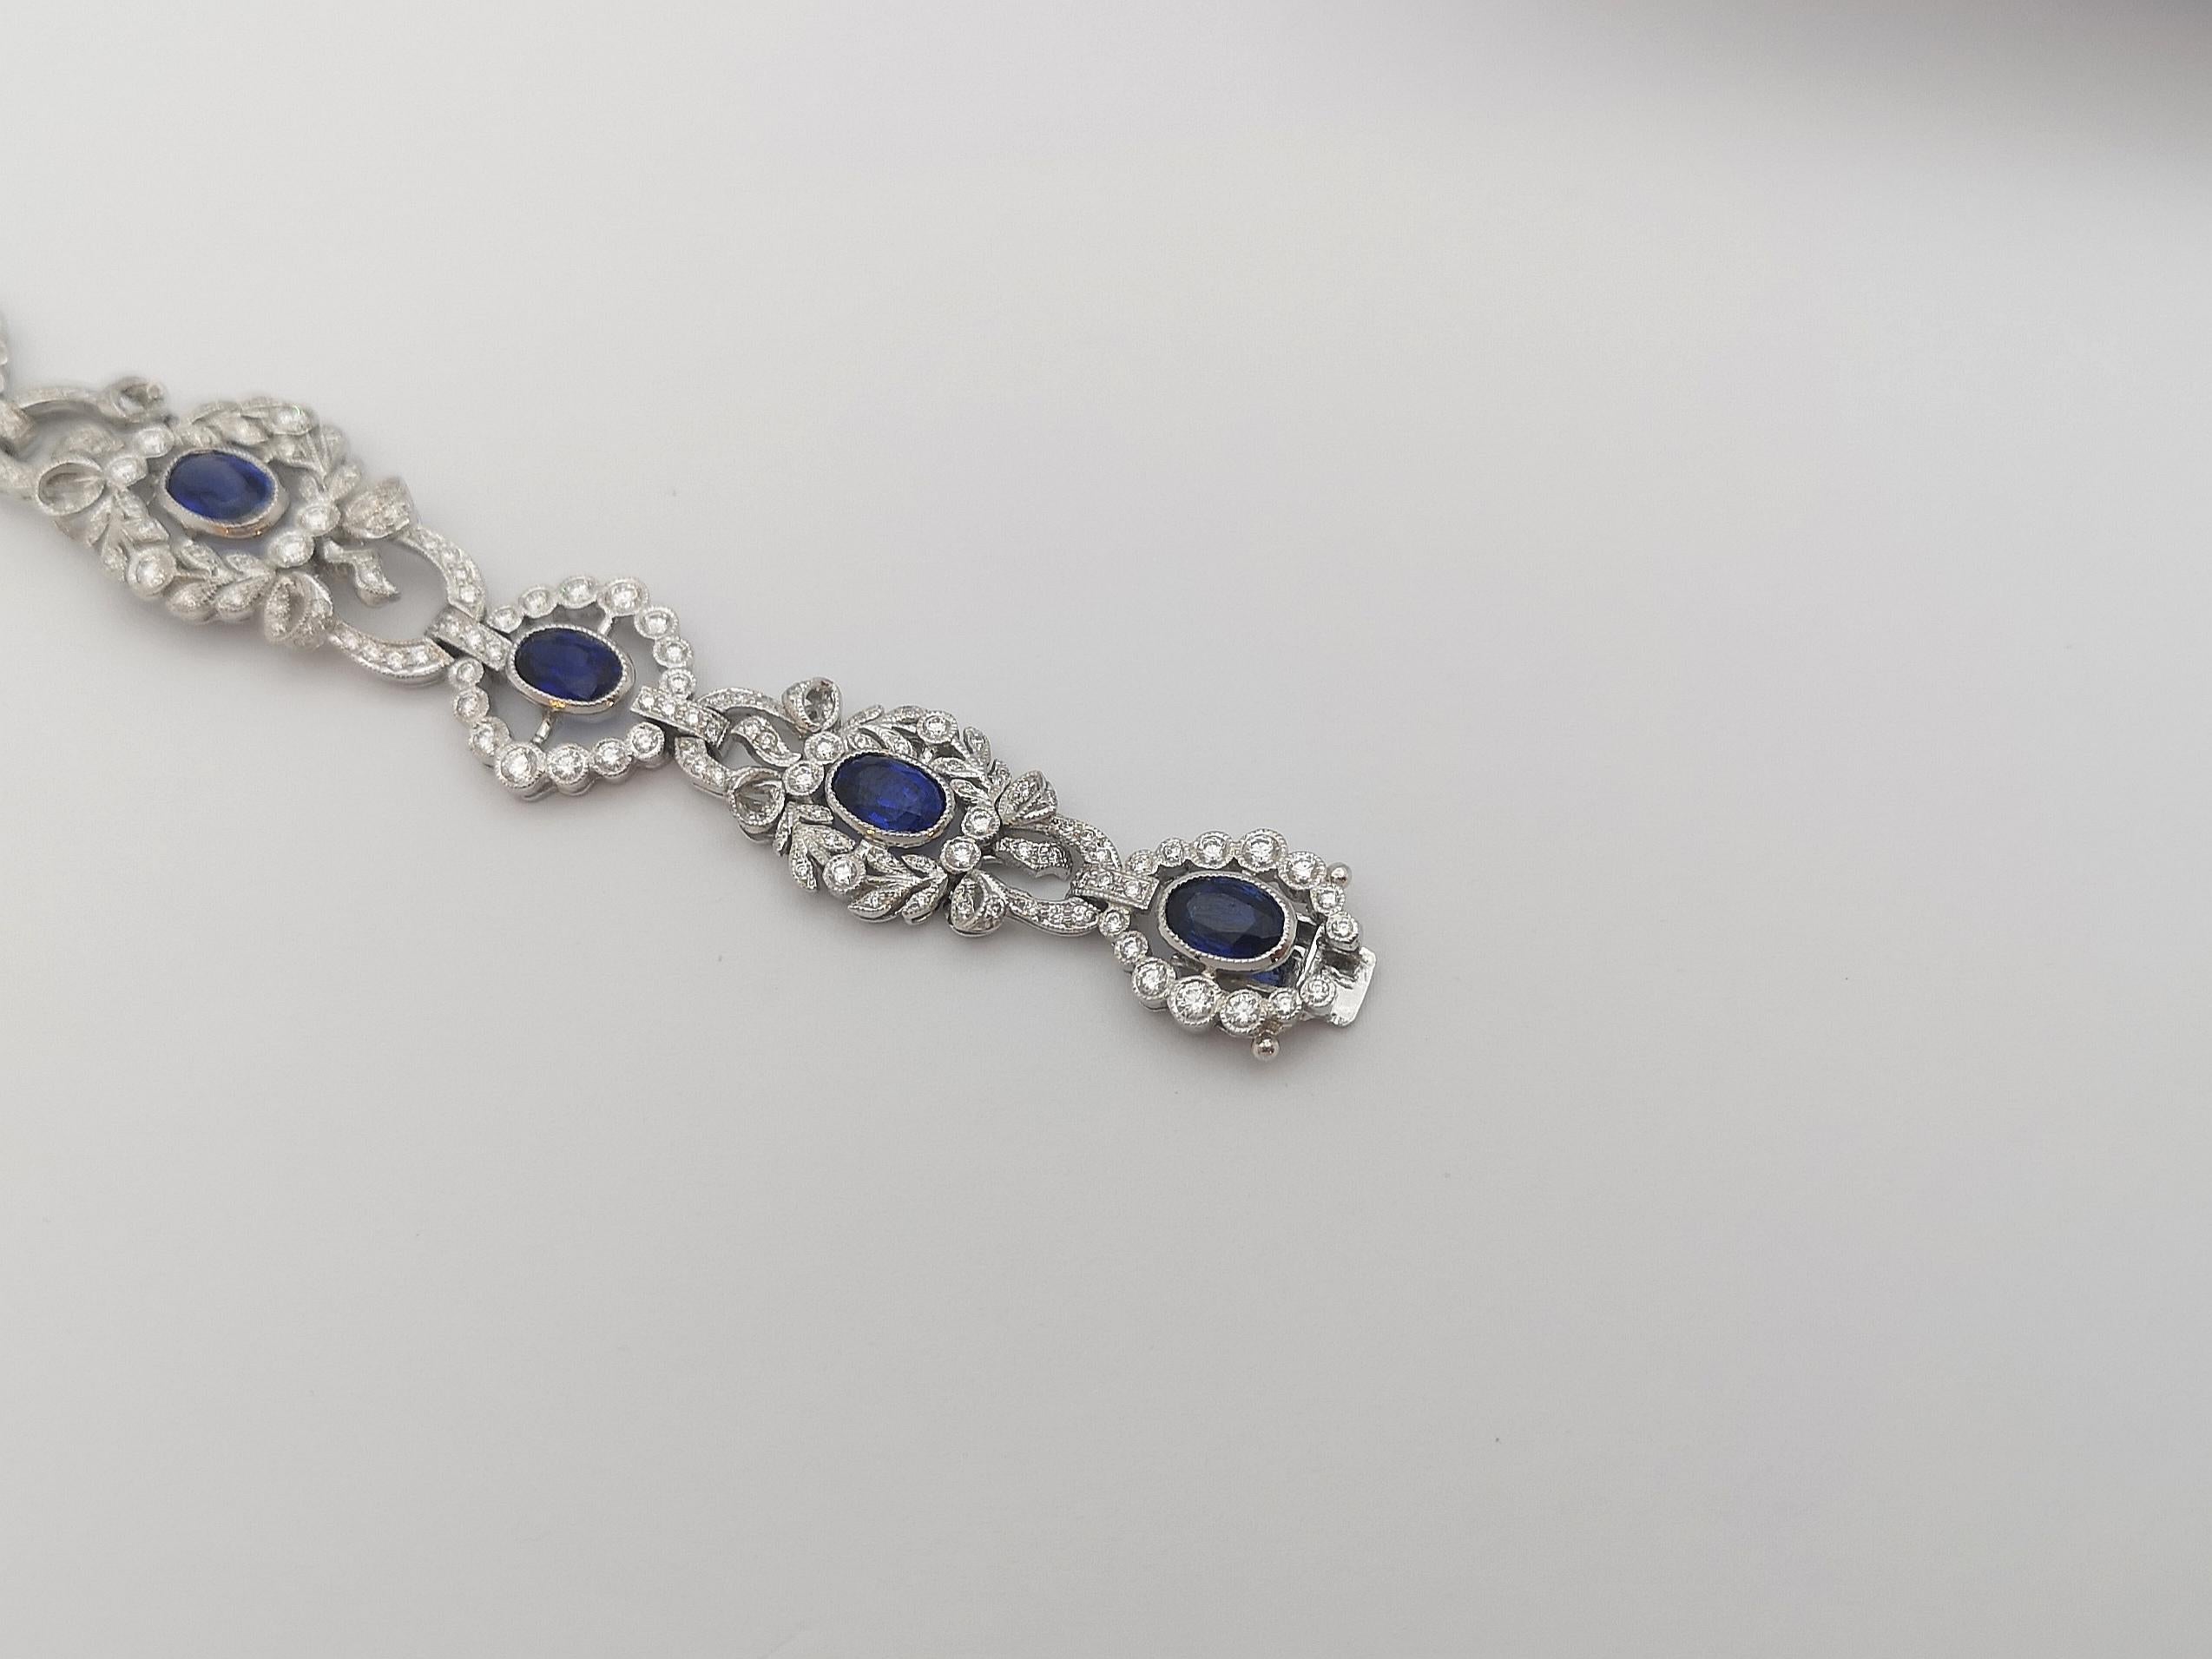  Blue Sapphire with Diamond Bracelet set in 18 Karat White Gold Settings For Sale 2